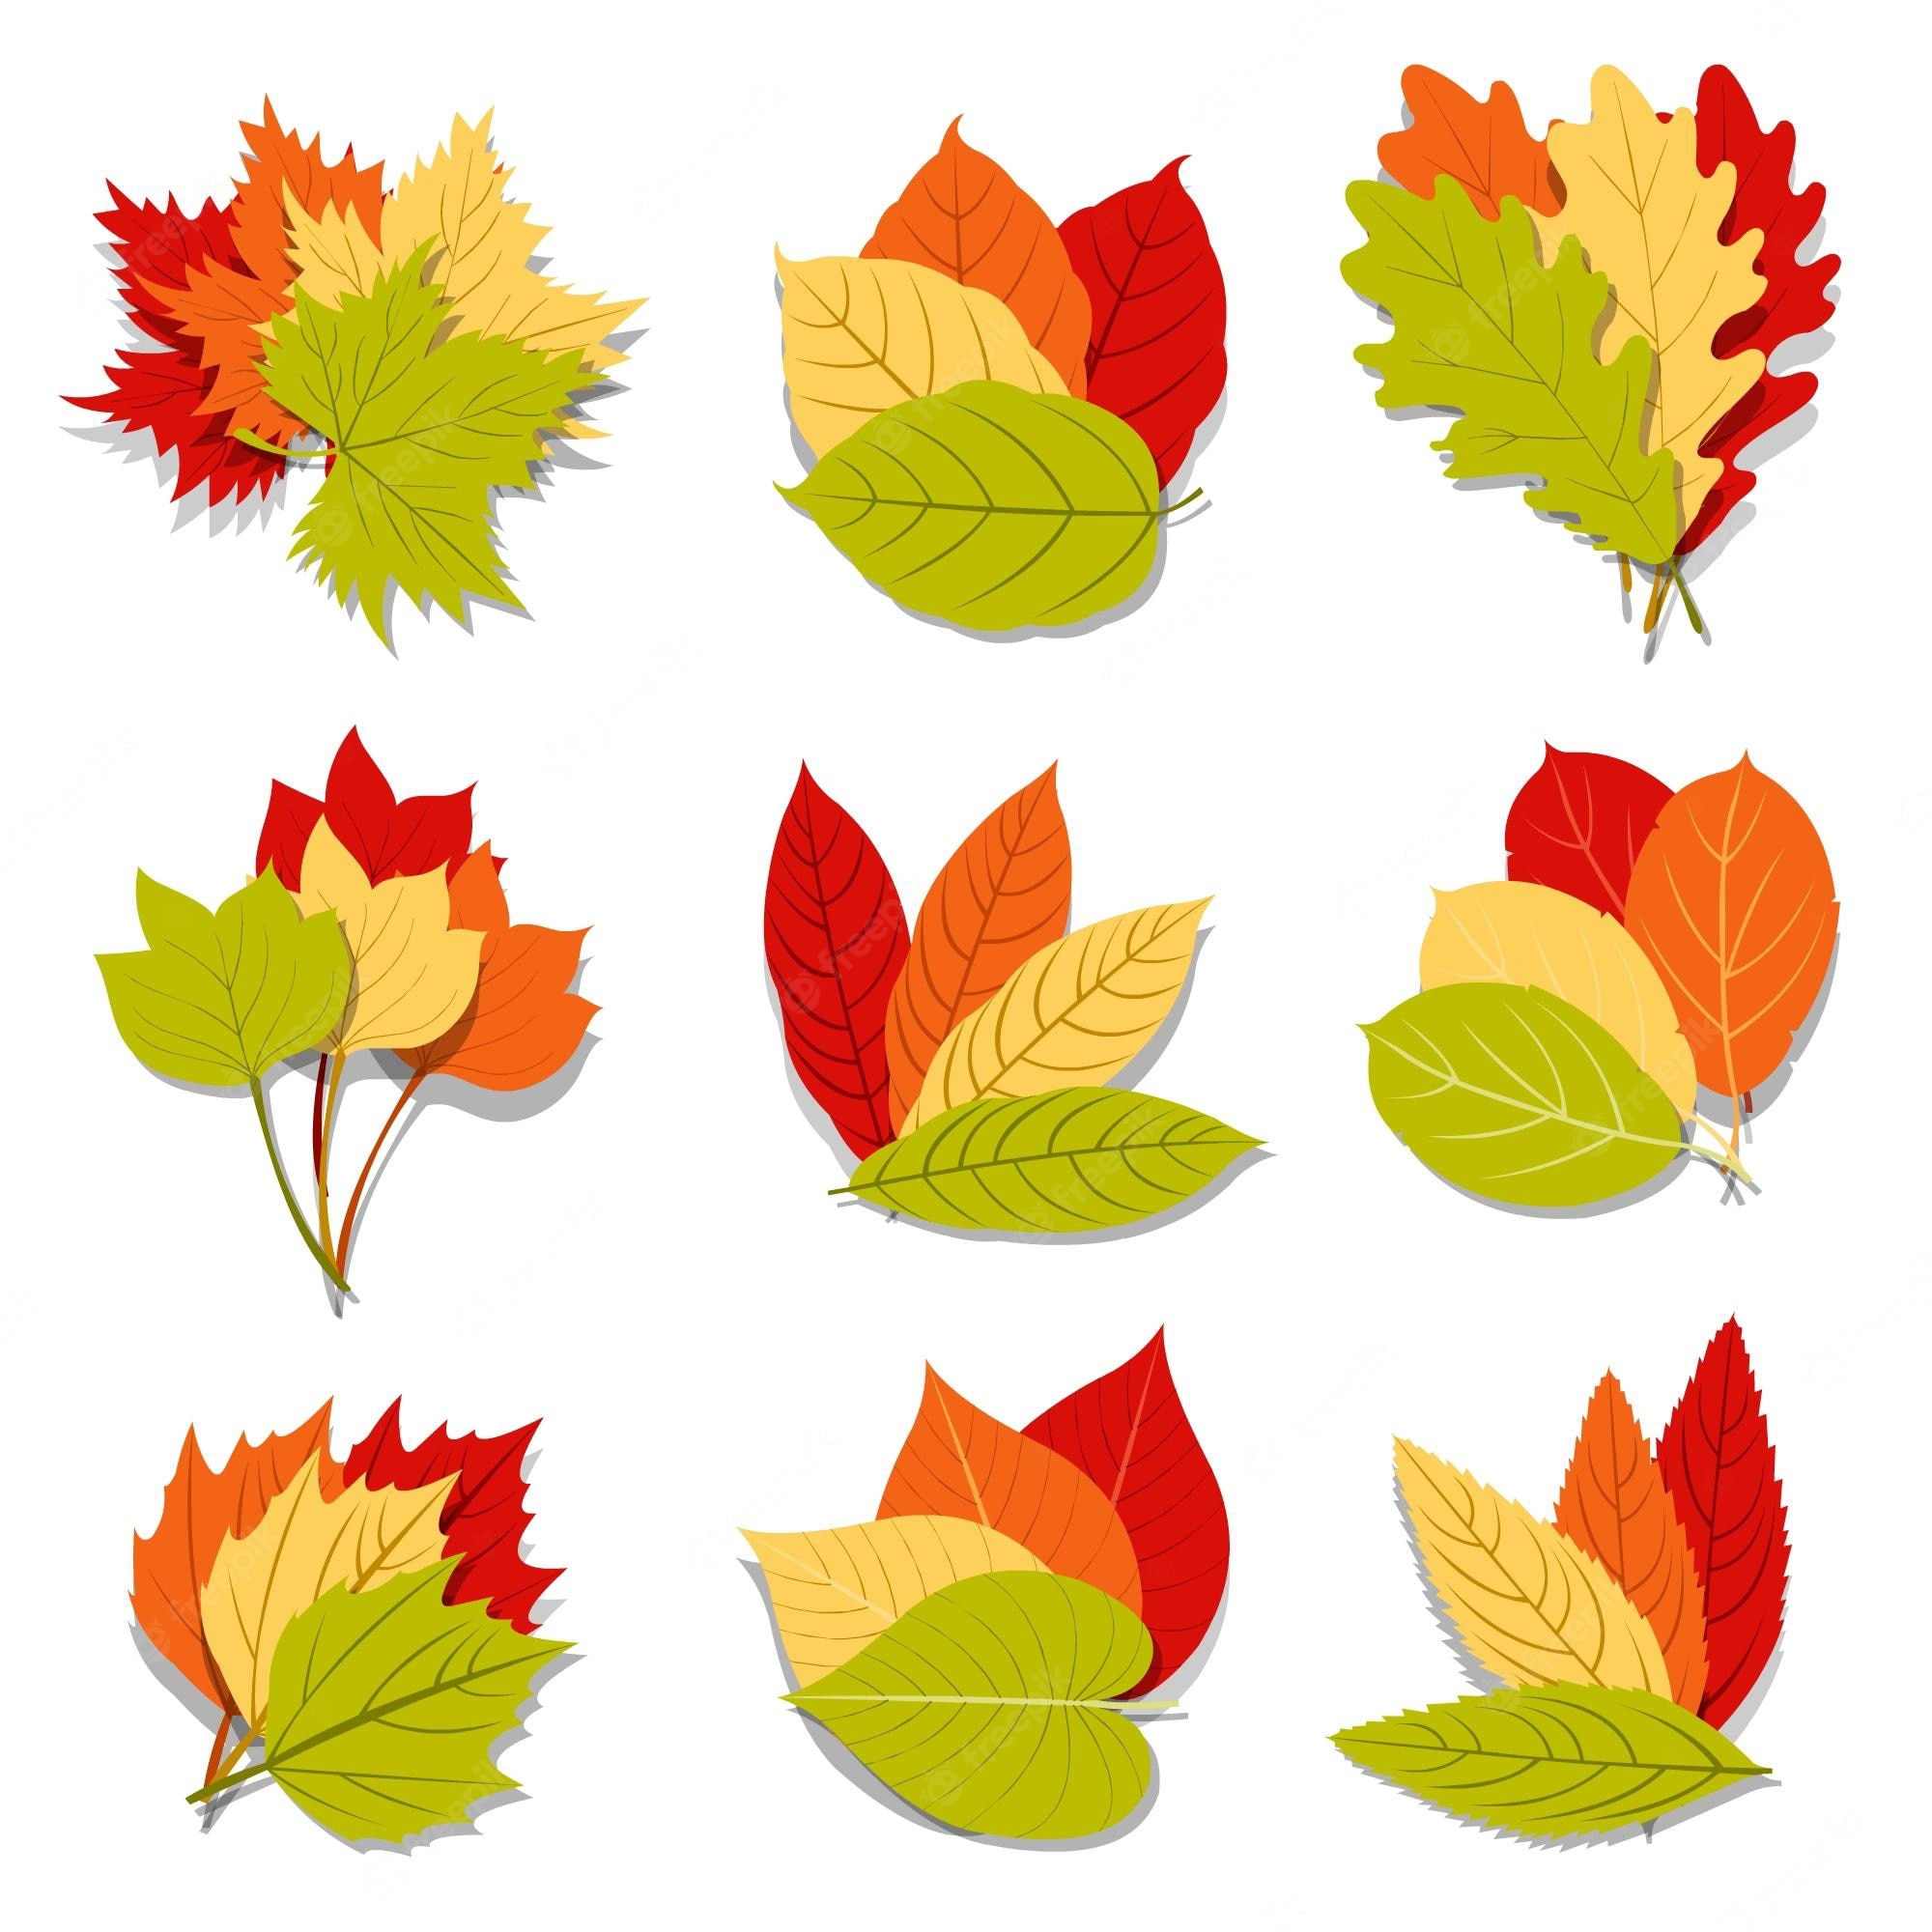 Autumn leaves cartoon Image. Free Vectors, & PSD